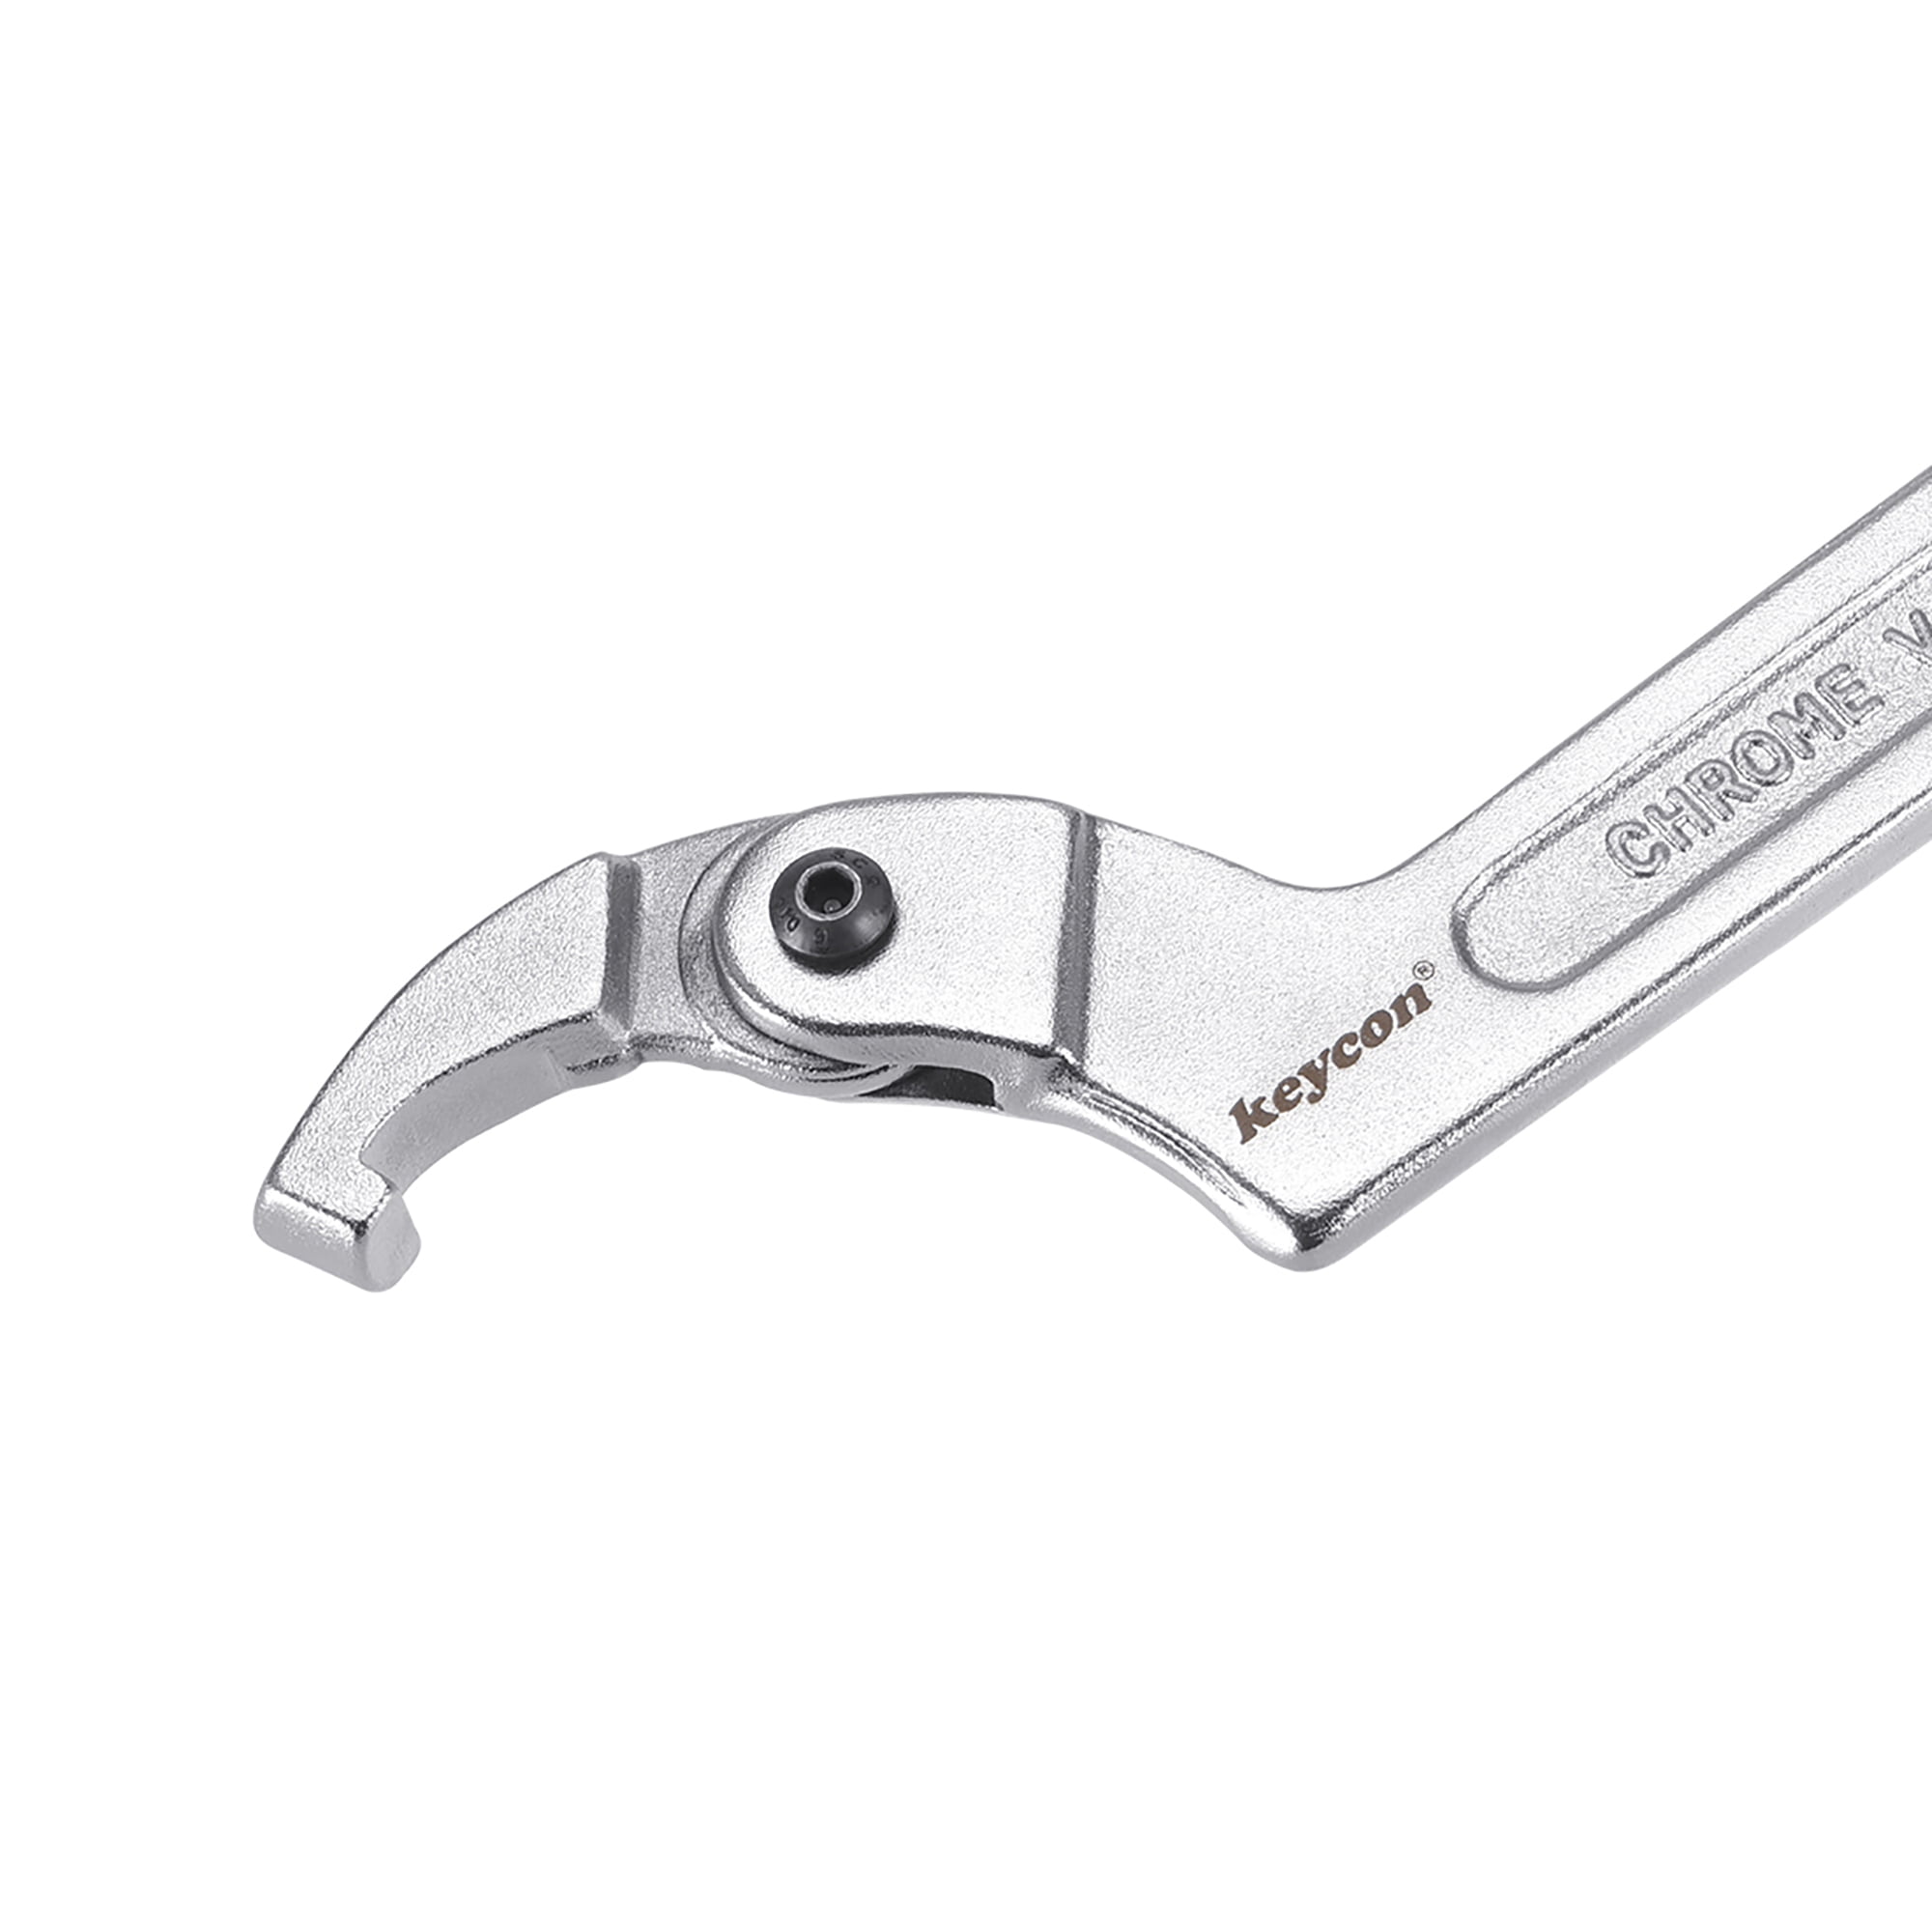 Square Nose Utoolmart C Spanner Tool Chrome Vanadium Adjustable Hook Wrench 1 1/4-3 Inch 32-76mm 1pcs 